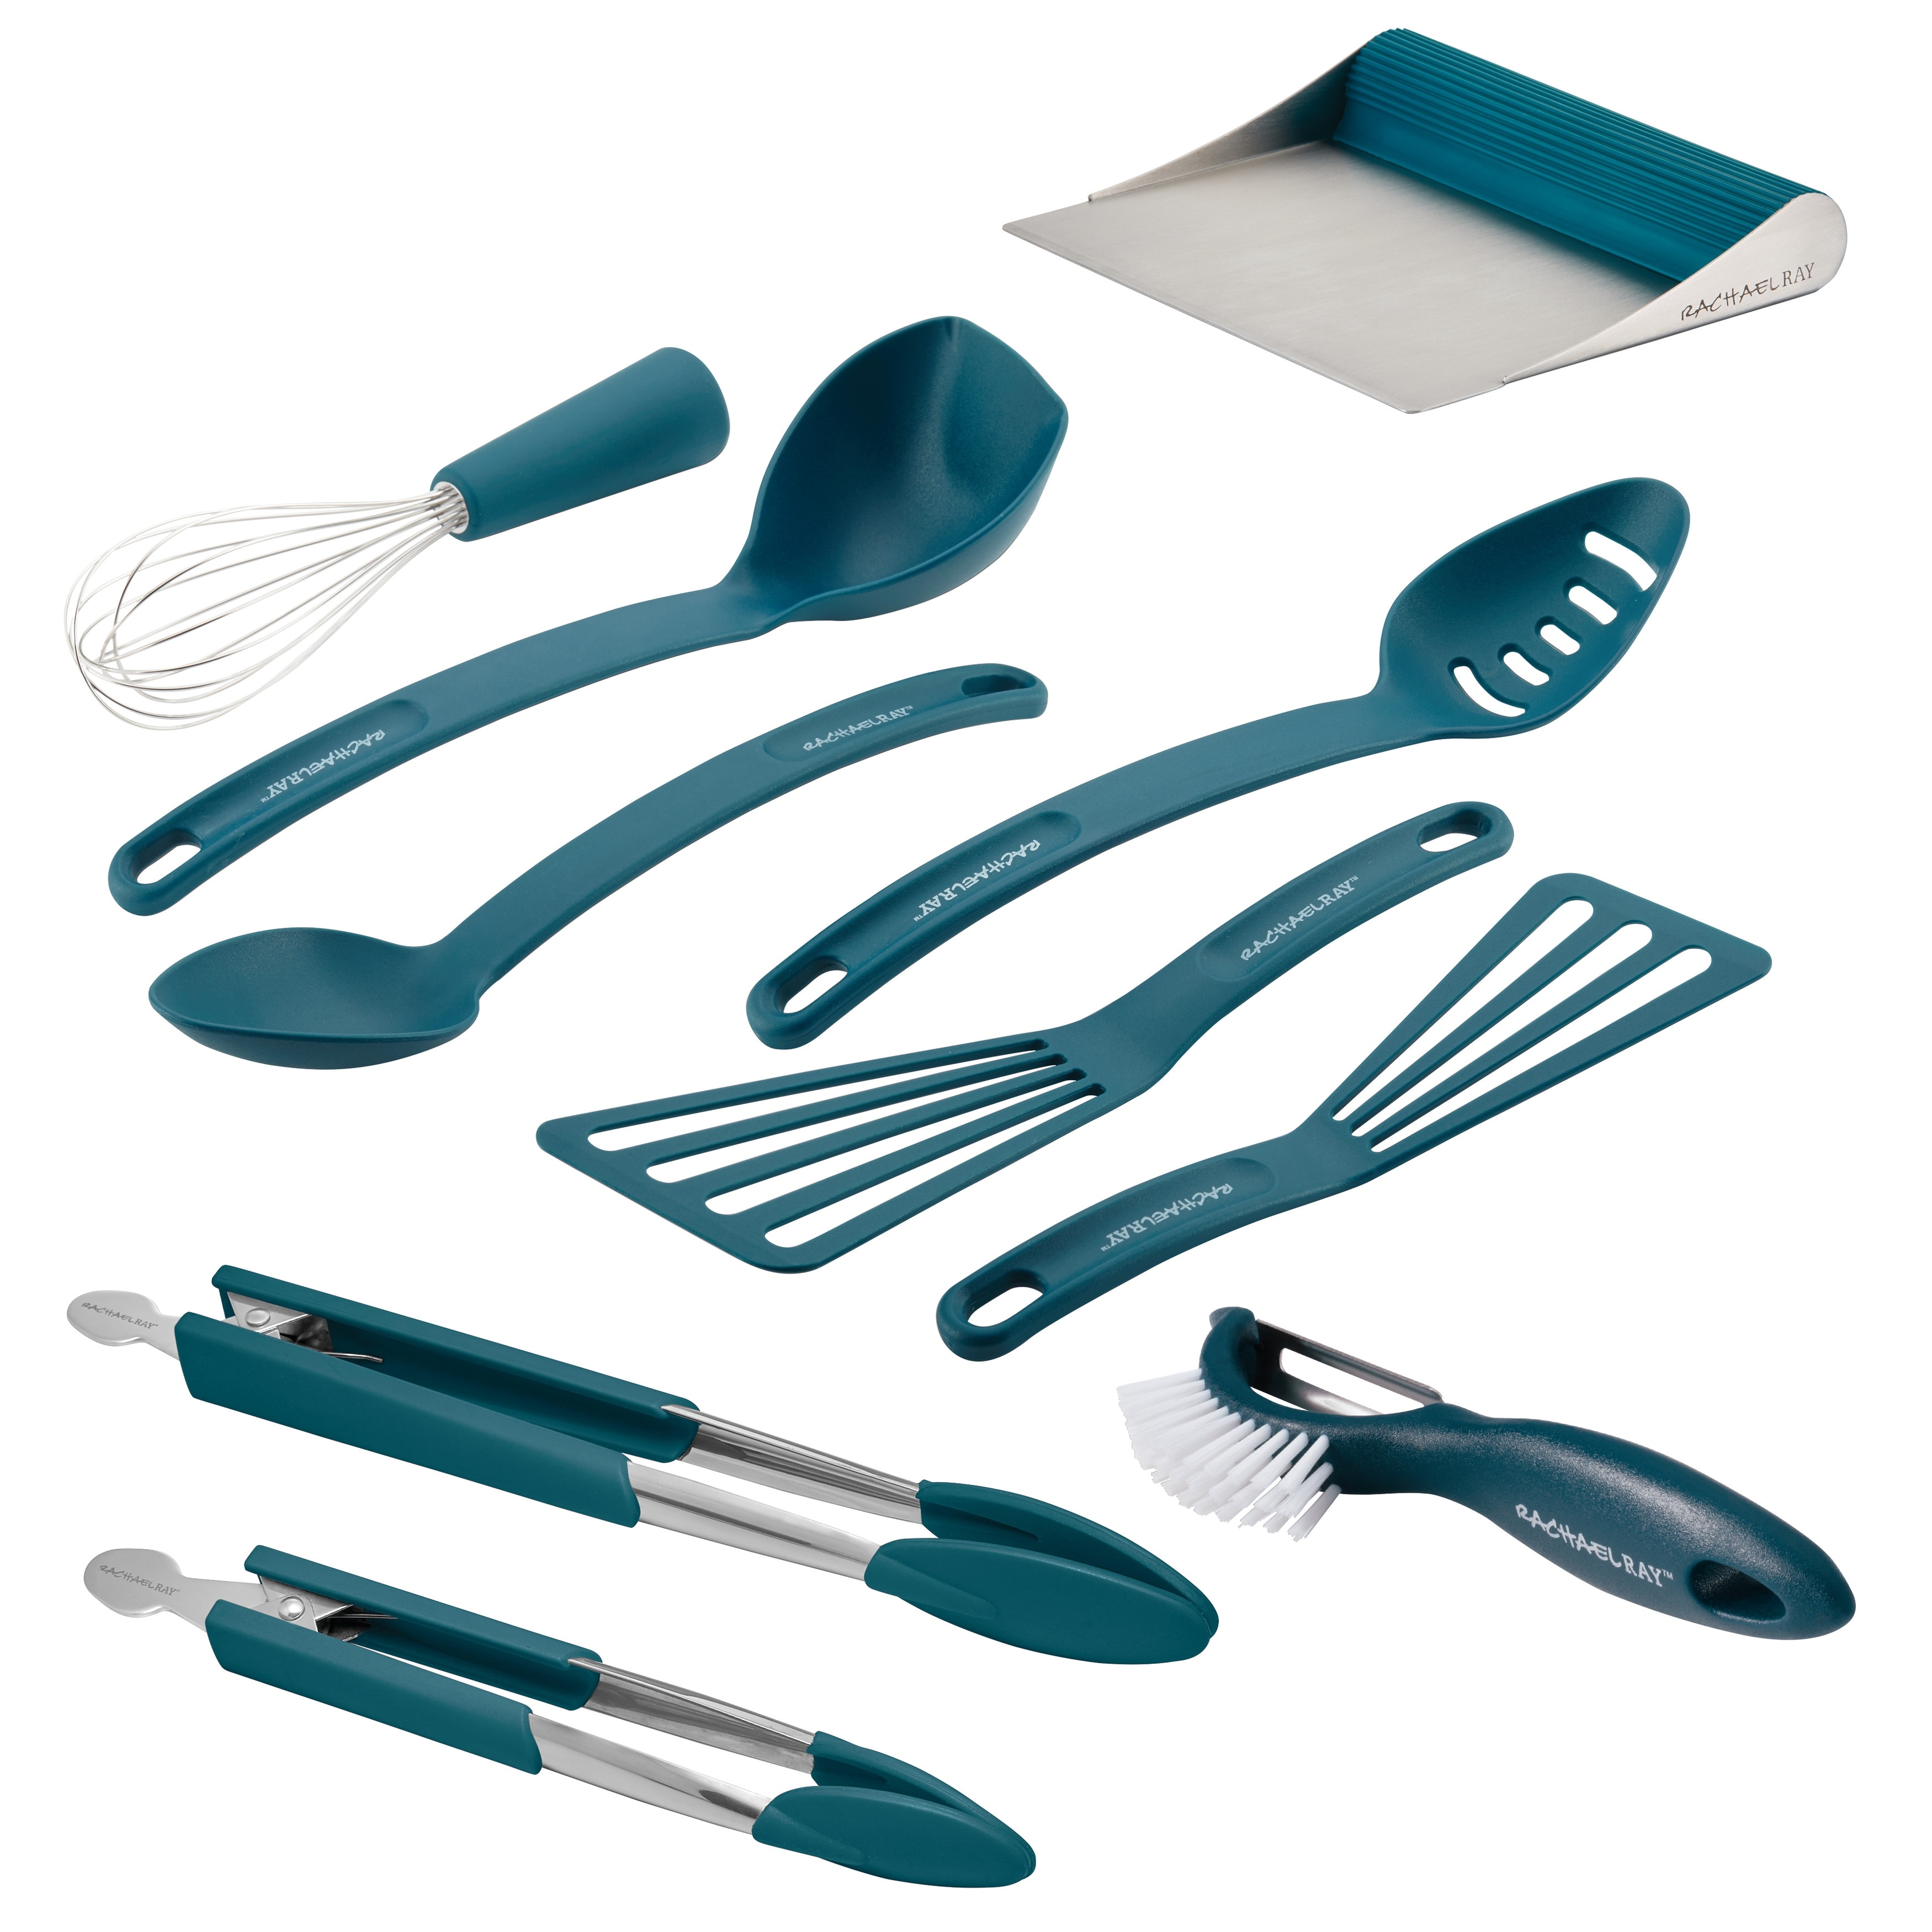 Anolon Tools and Gadgets SureGrip Nonstick Kitchen Utensil Set, 10-Piece